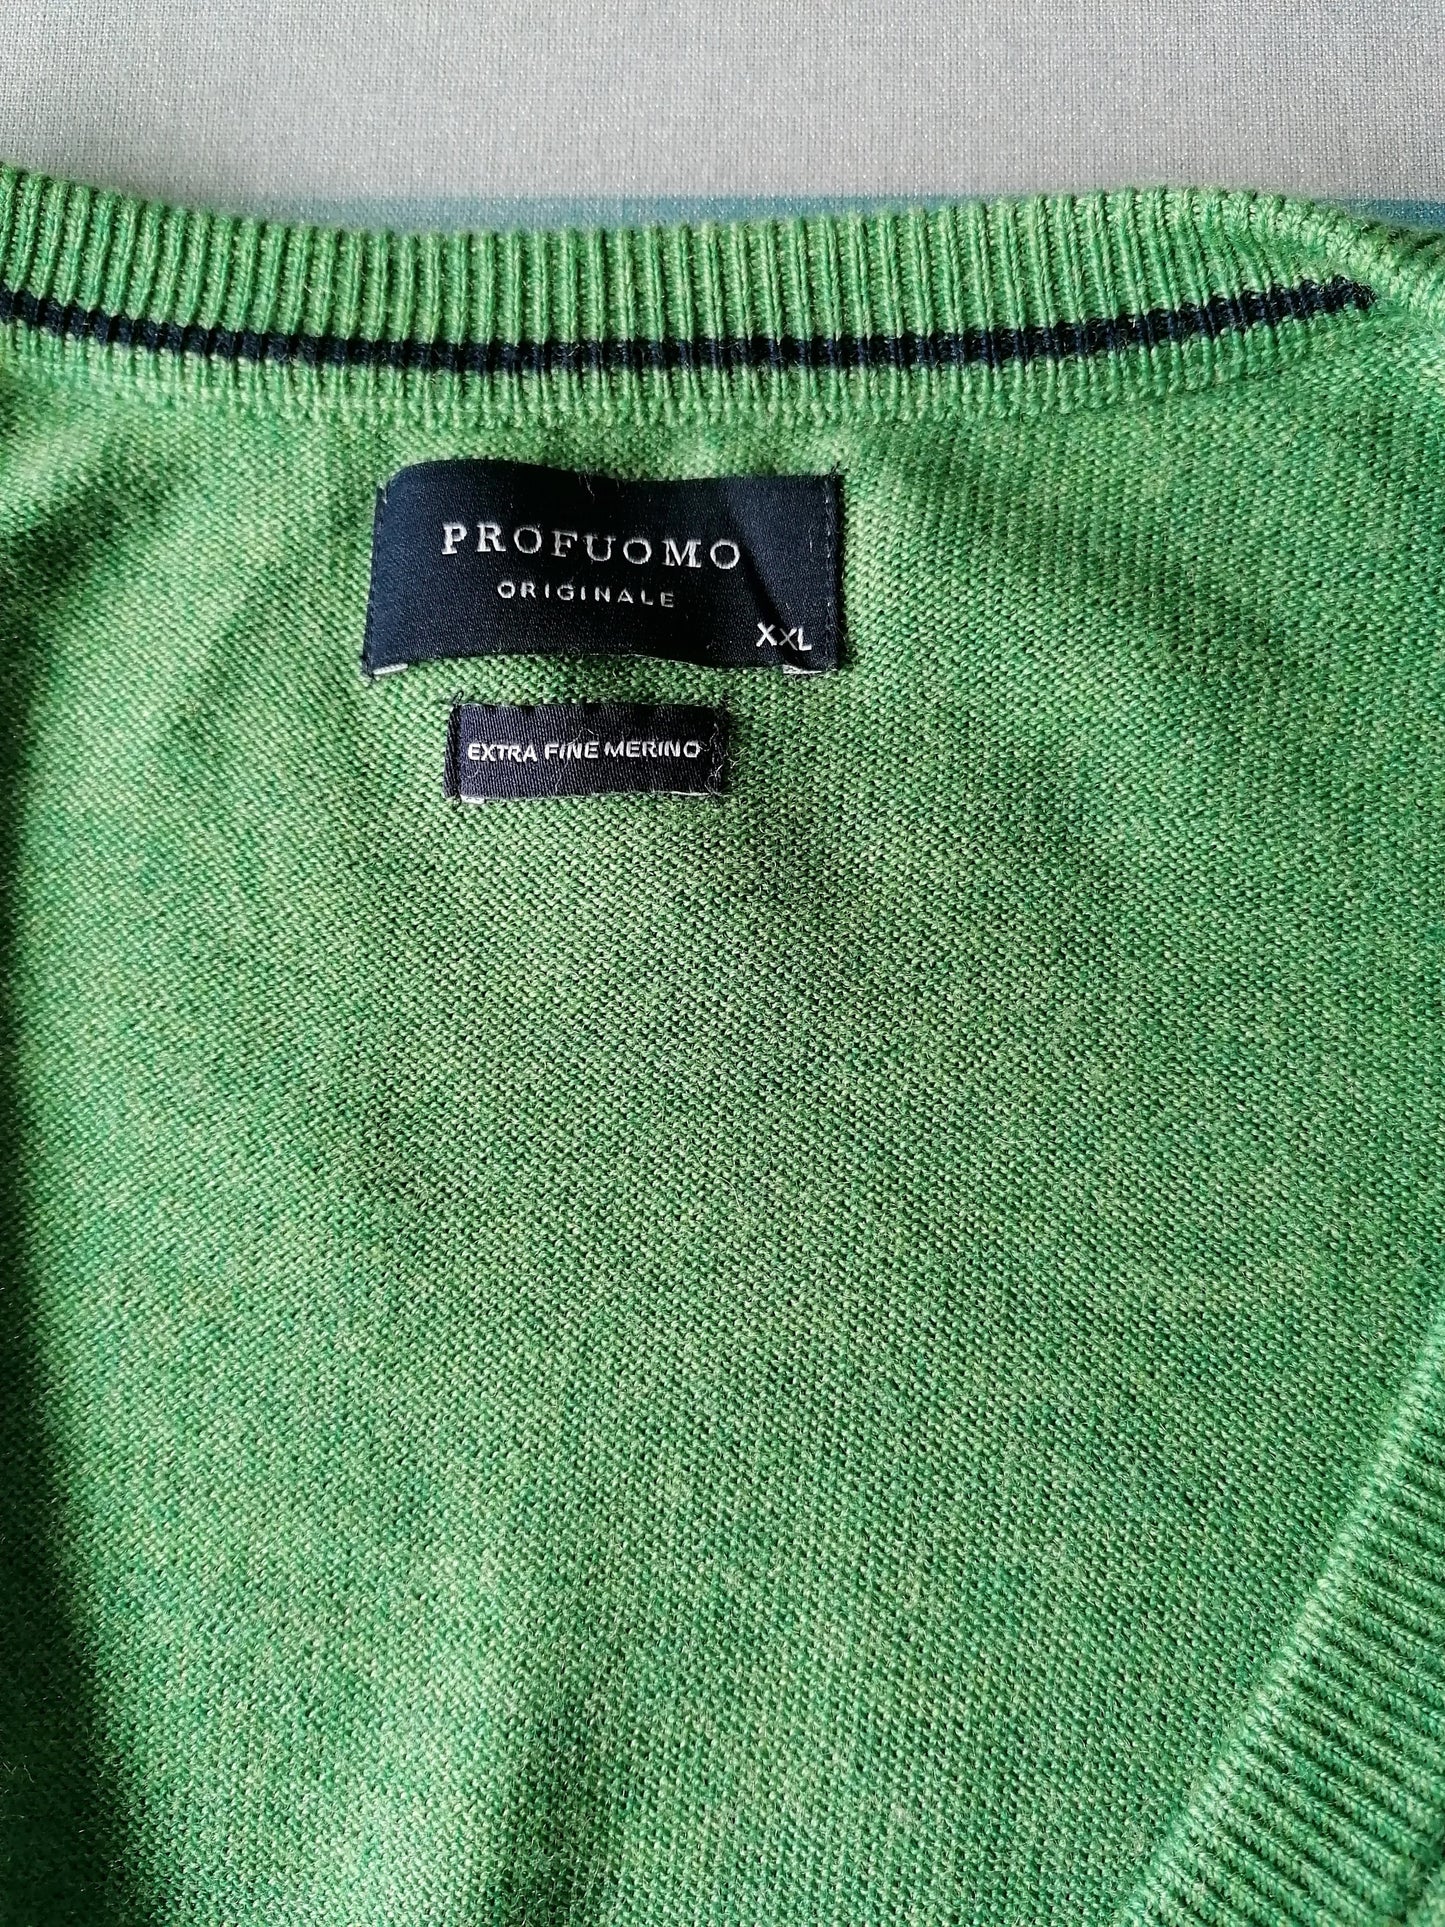 Chaleco de lana MERINO PROFUOMO. Color verde. Tamaño XXL / 2XL